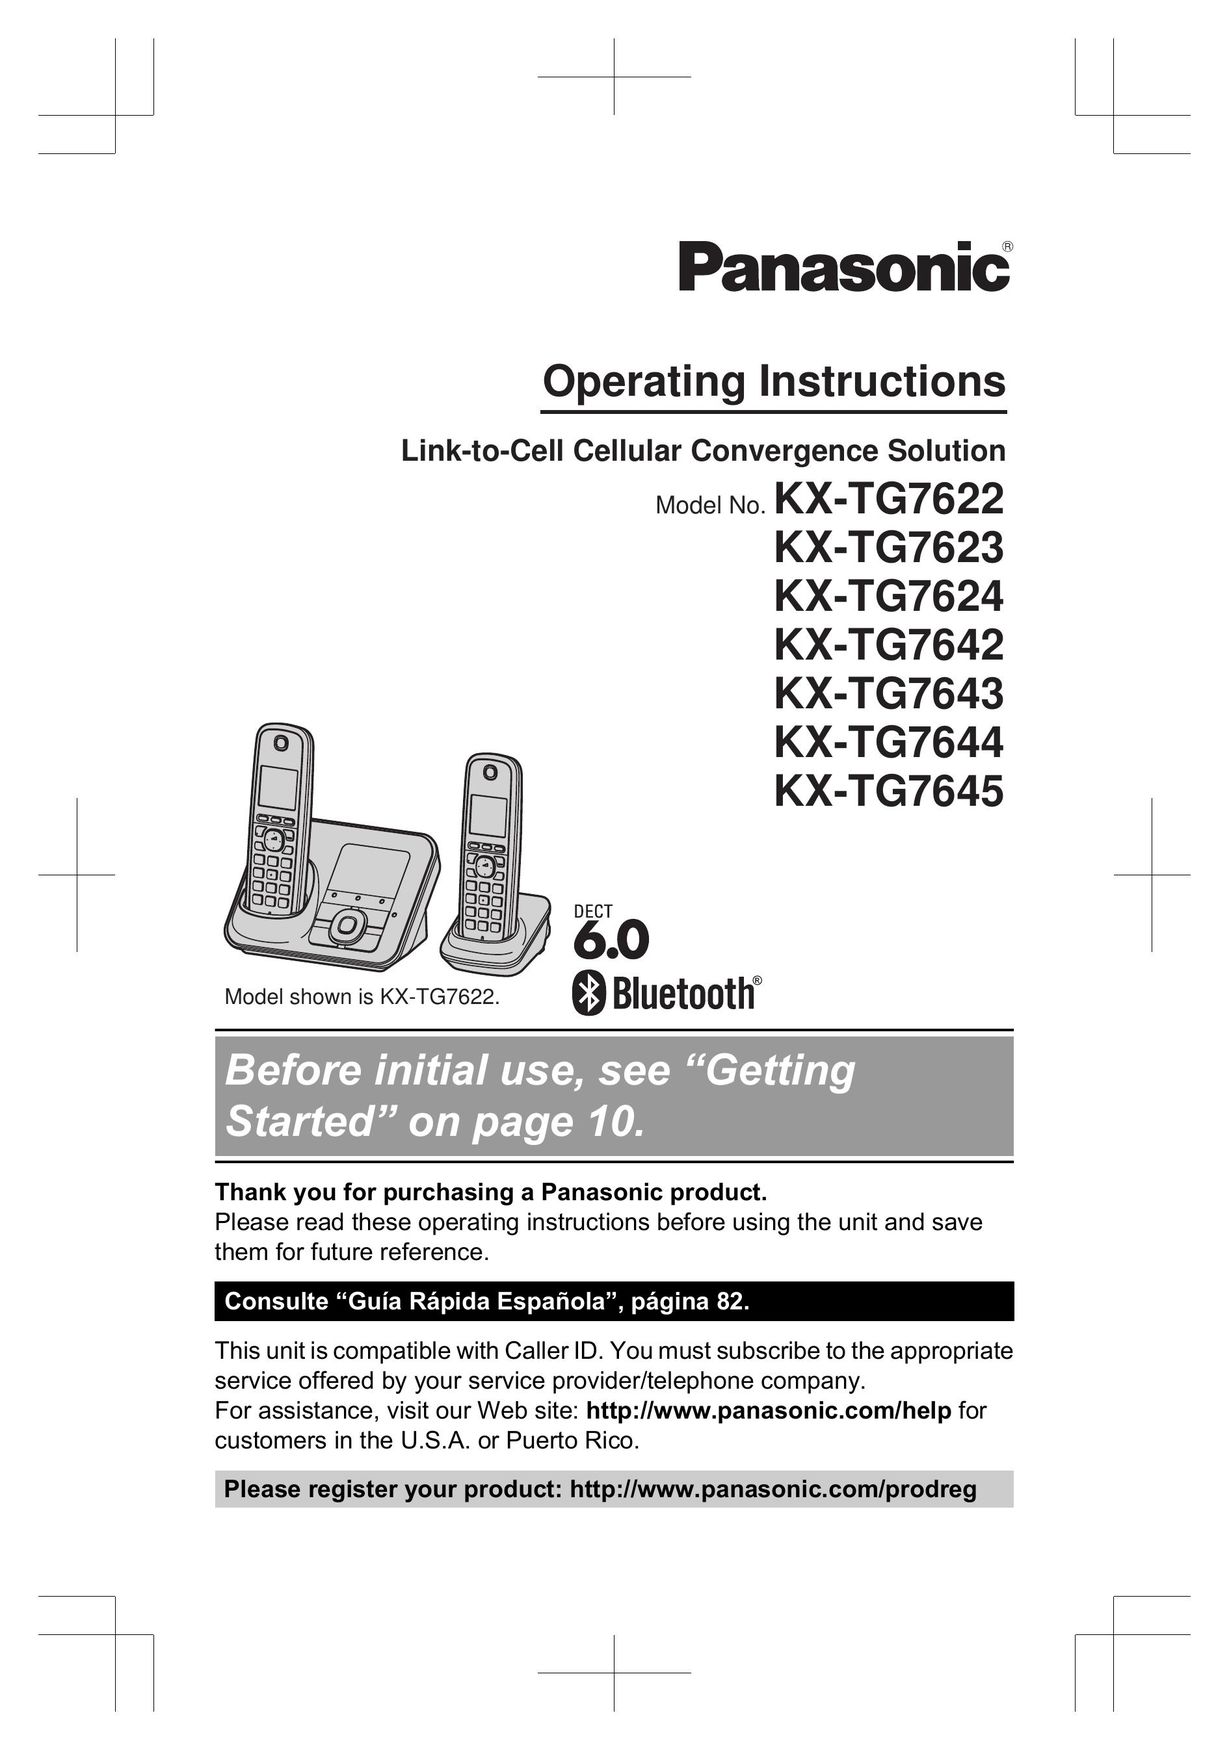 Panasonic KX-TG7644M Bluetooth Headset User Manual